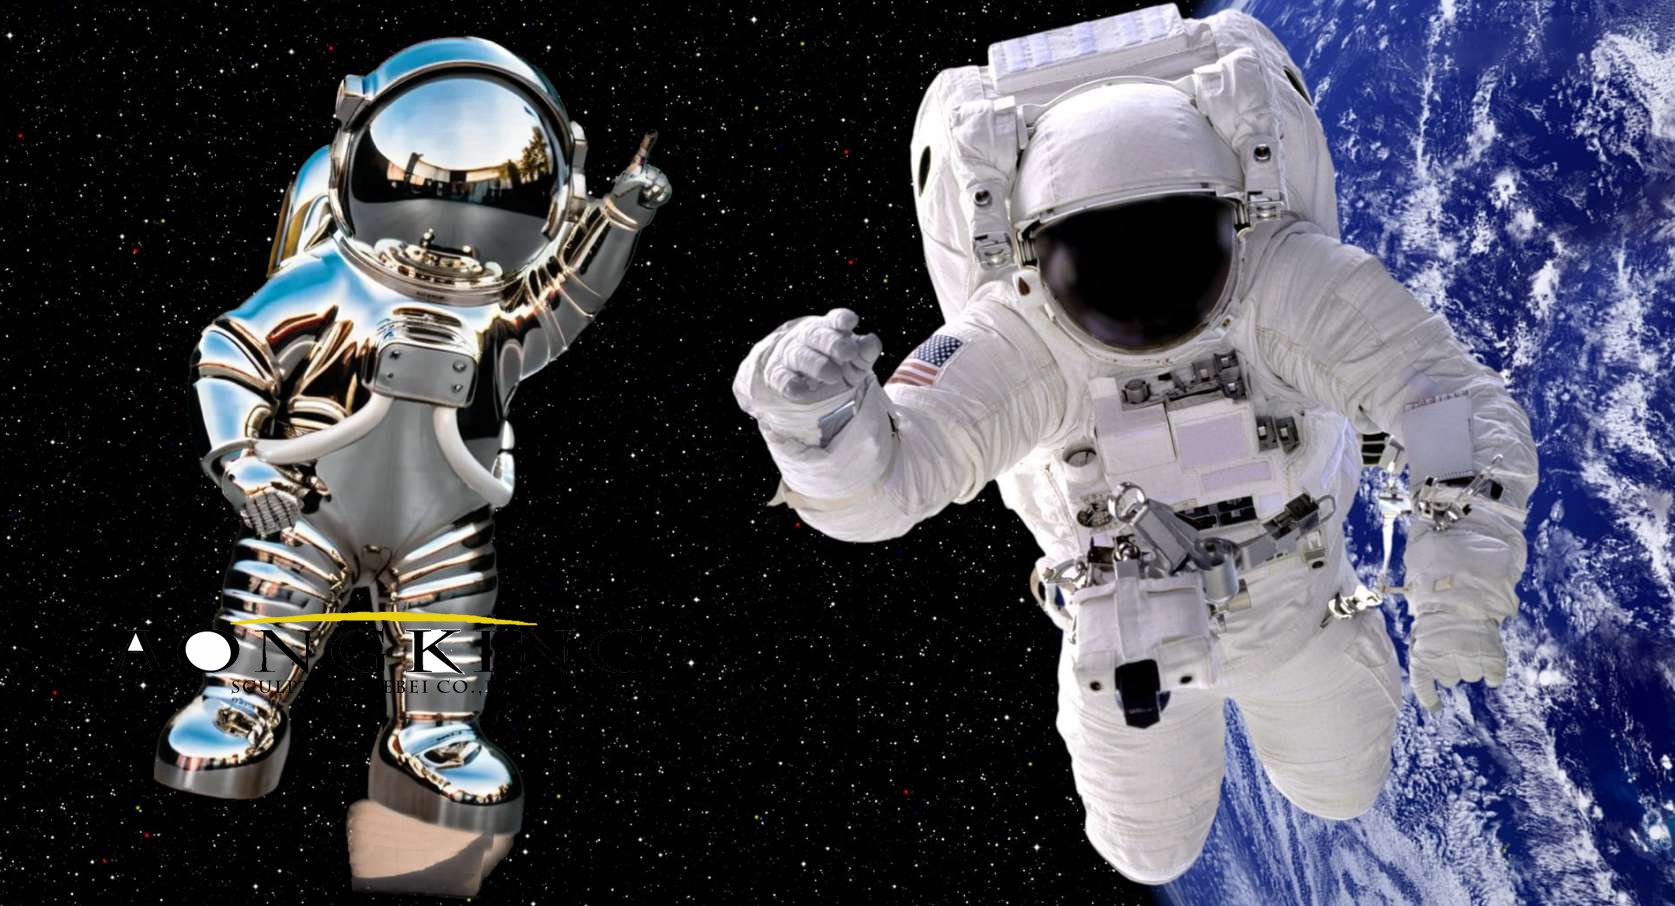 Intergalactic explorer stainless steel stainless steel astronaut statue